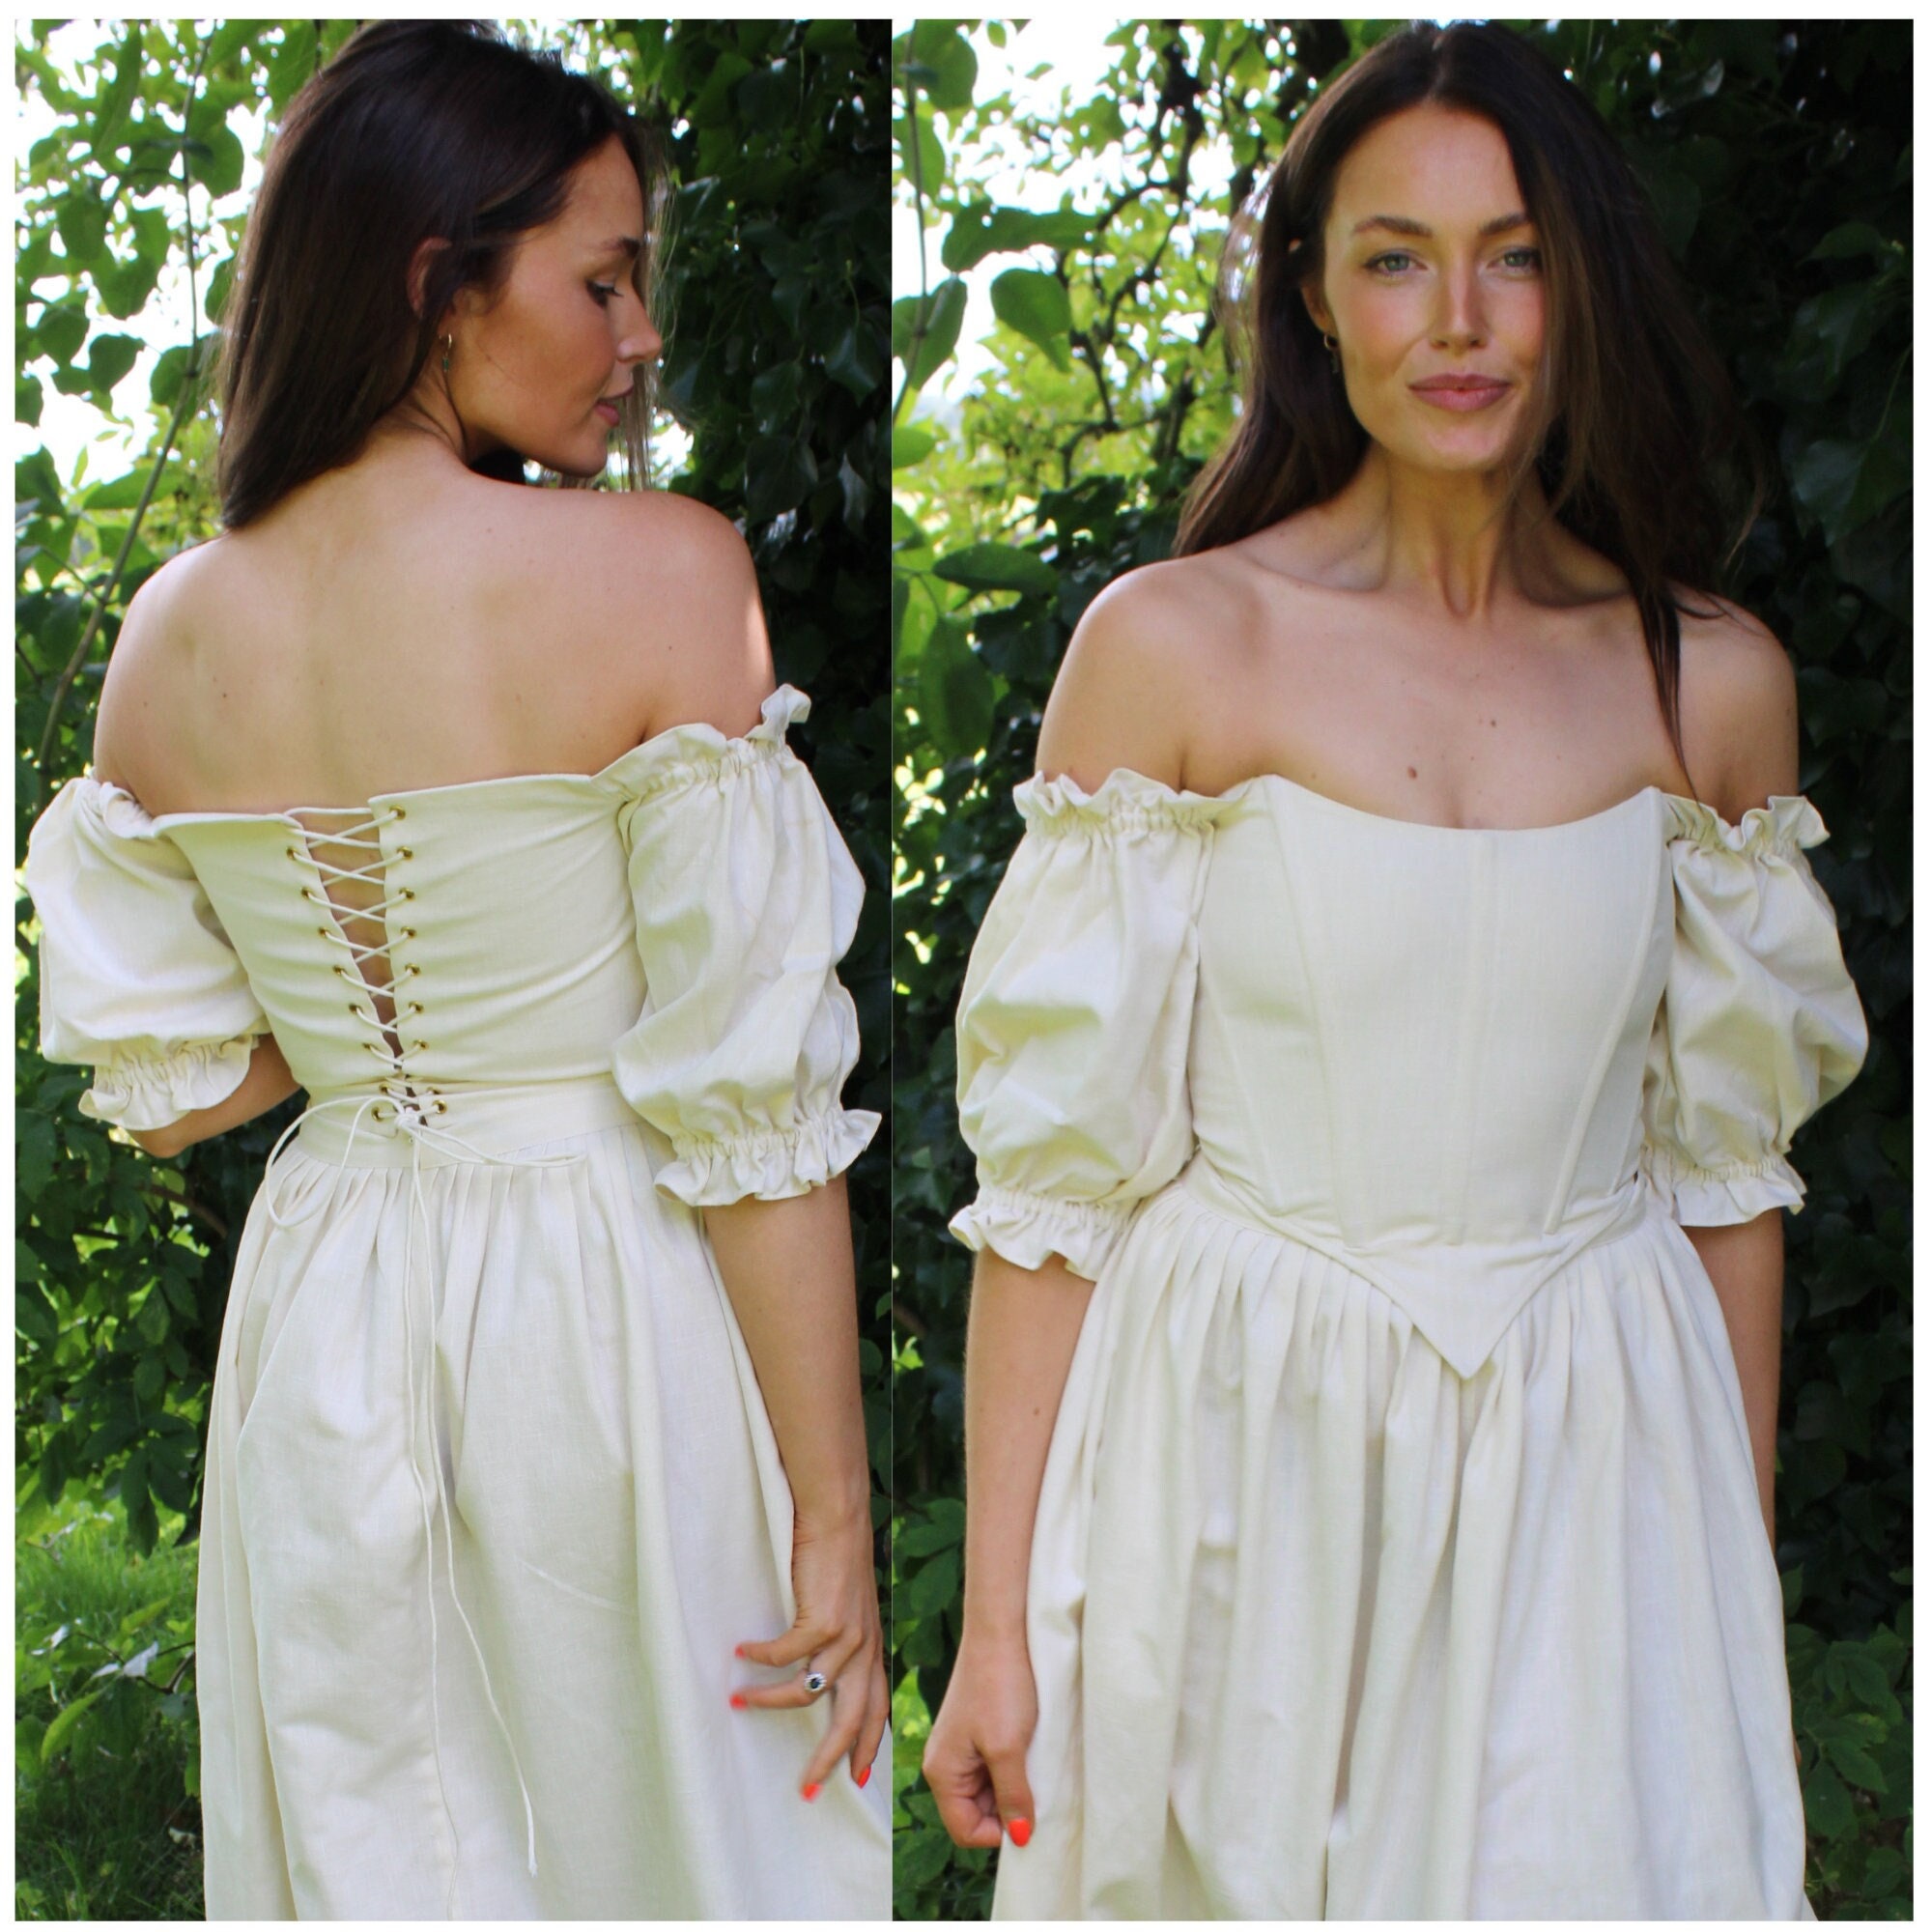 Buy Medieval Corset Dress online